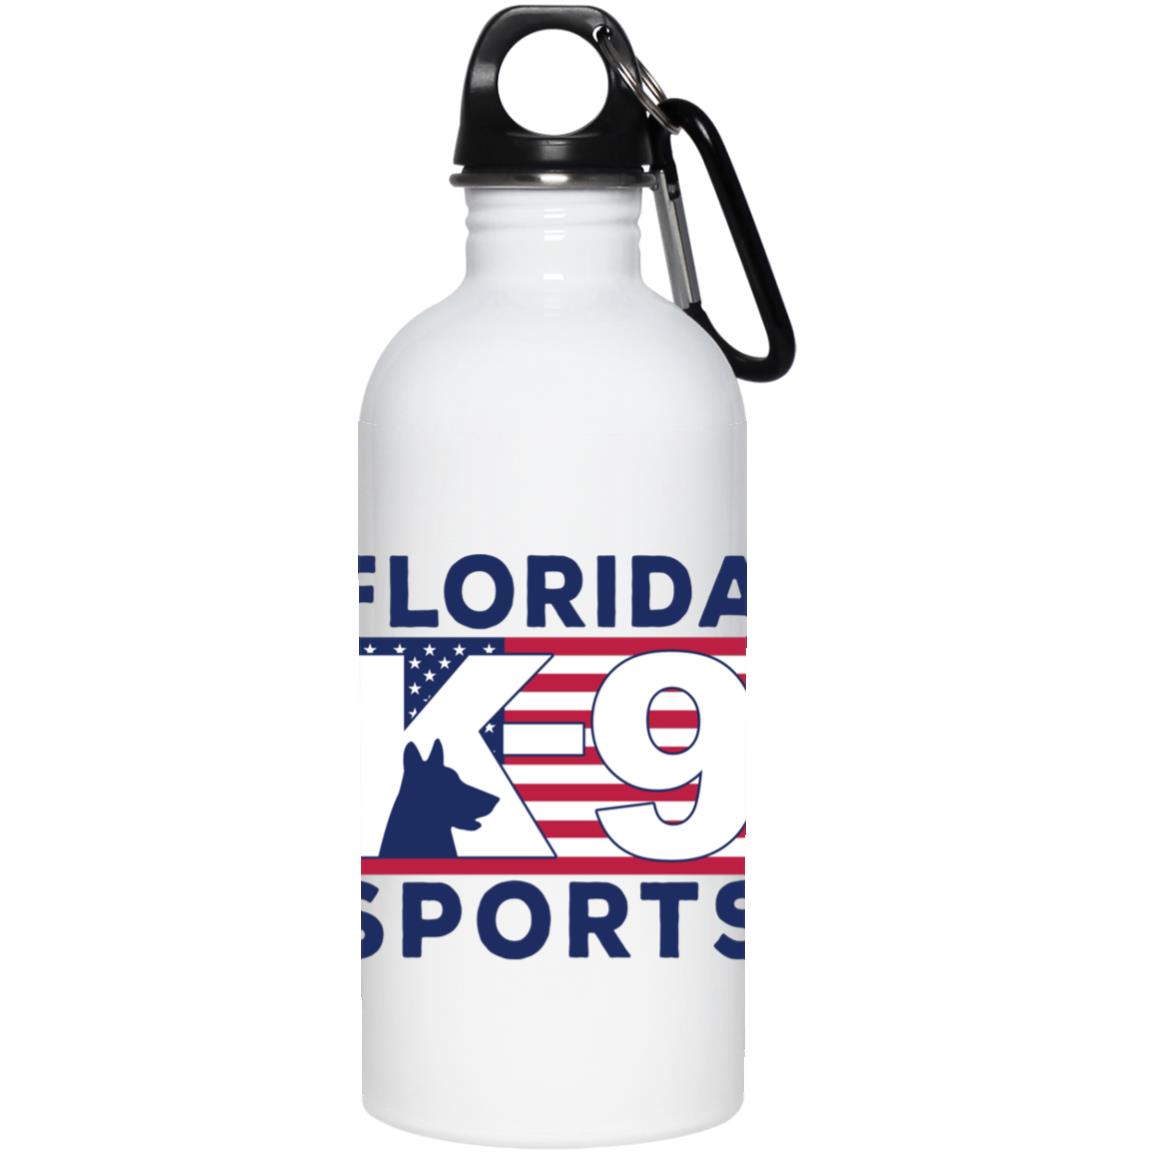 Florida K9 Sports 20 oz. Stainless Steel Water Bottle